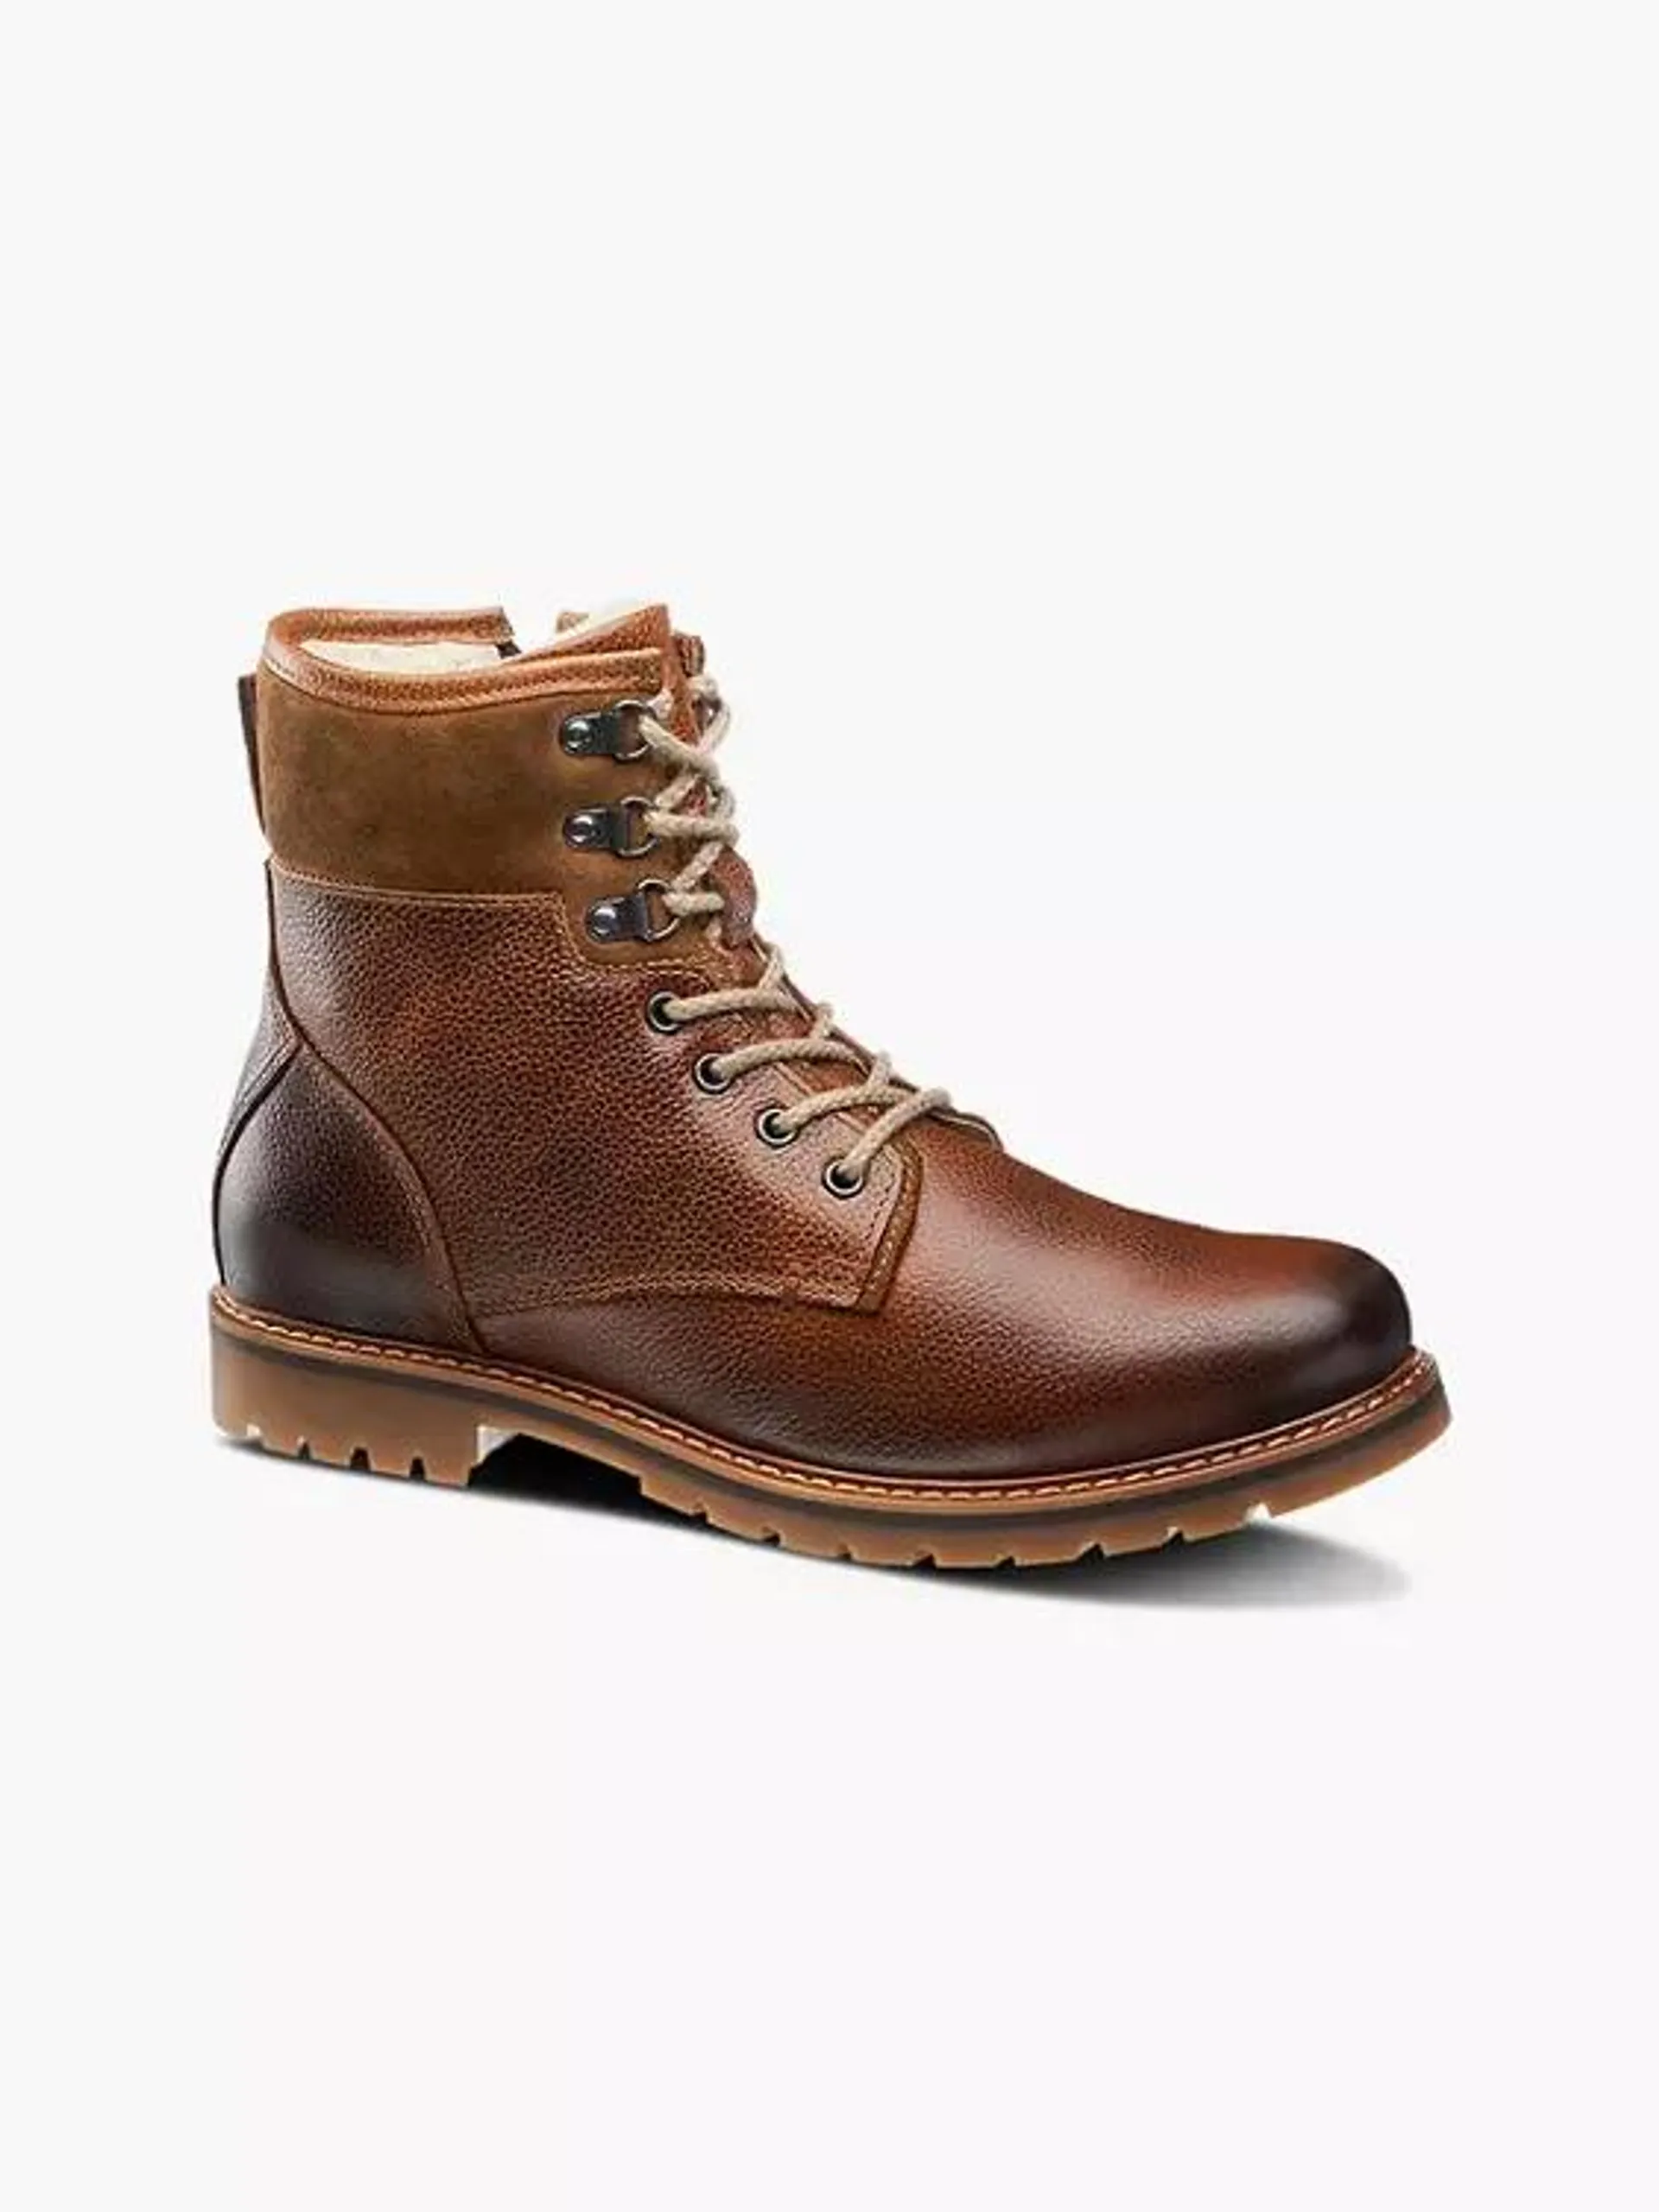 AM Shoe Men's Leather Brown Lace-up Boots